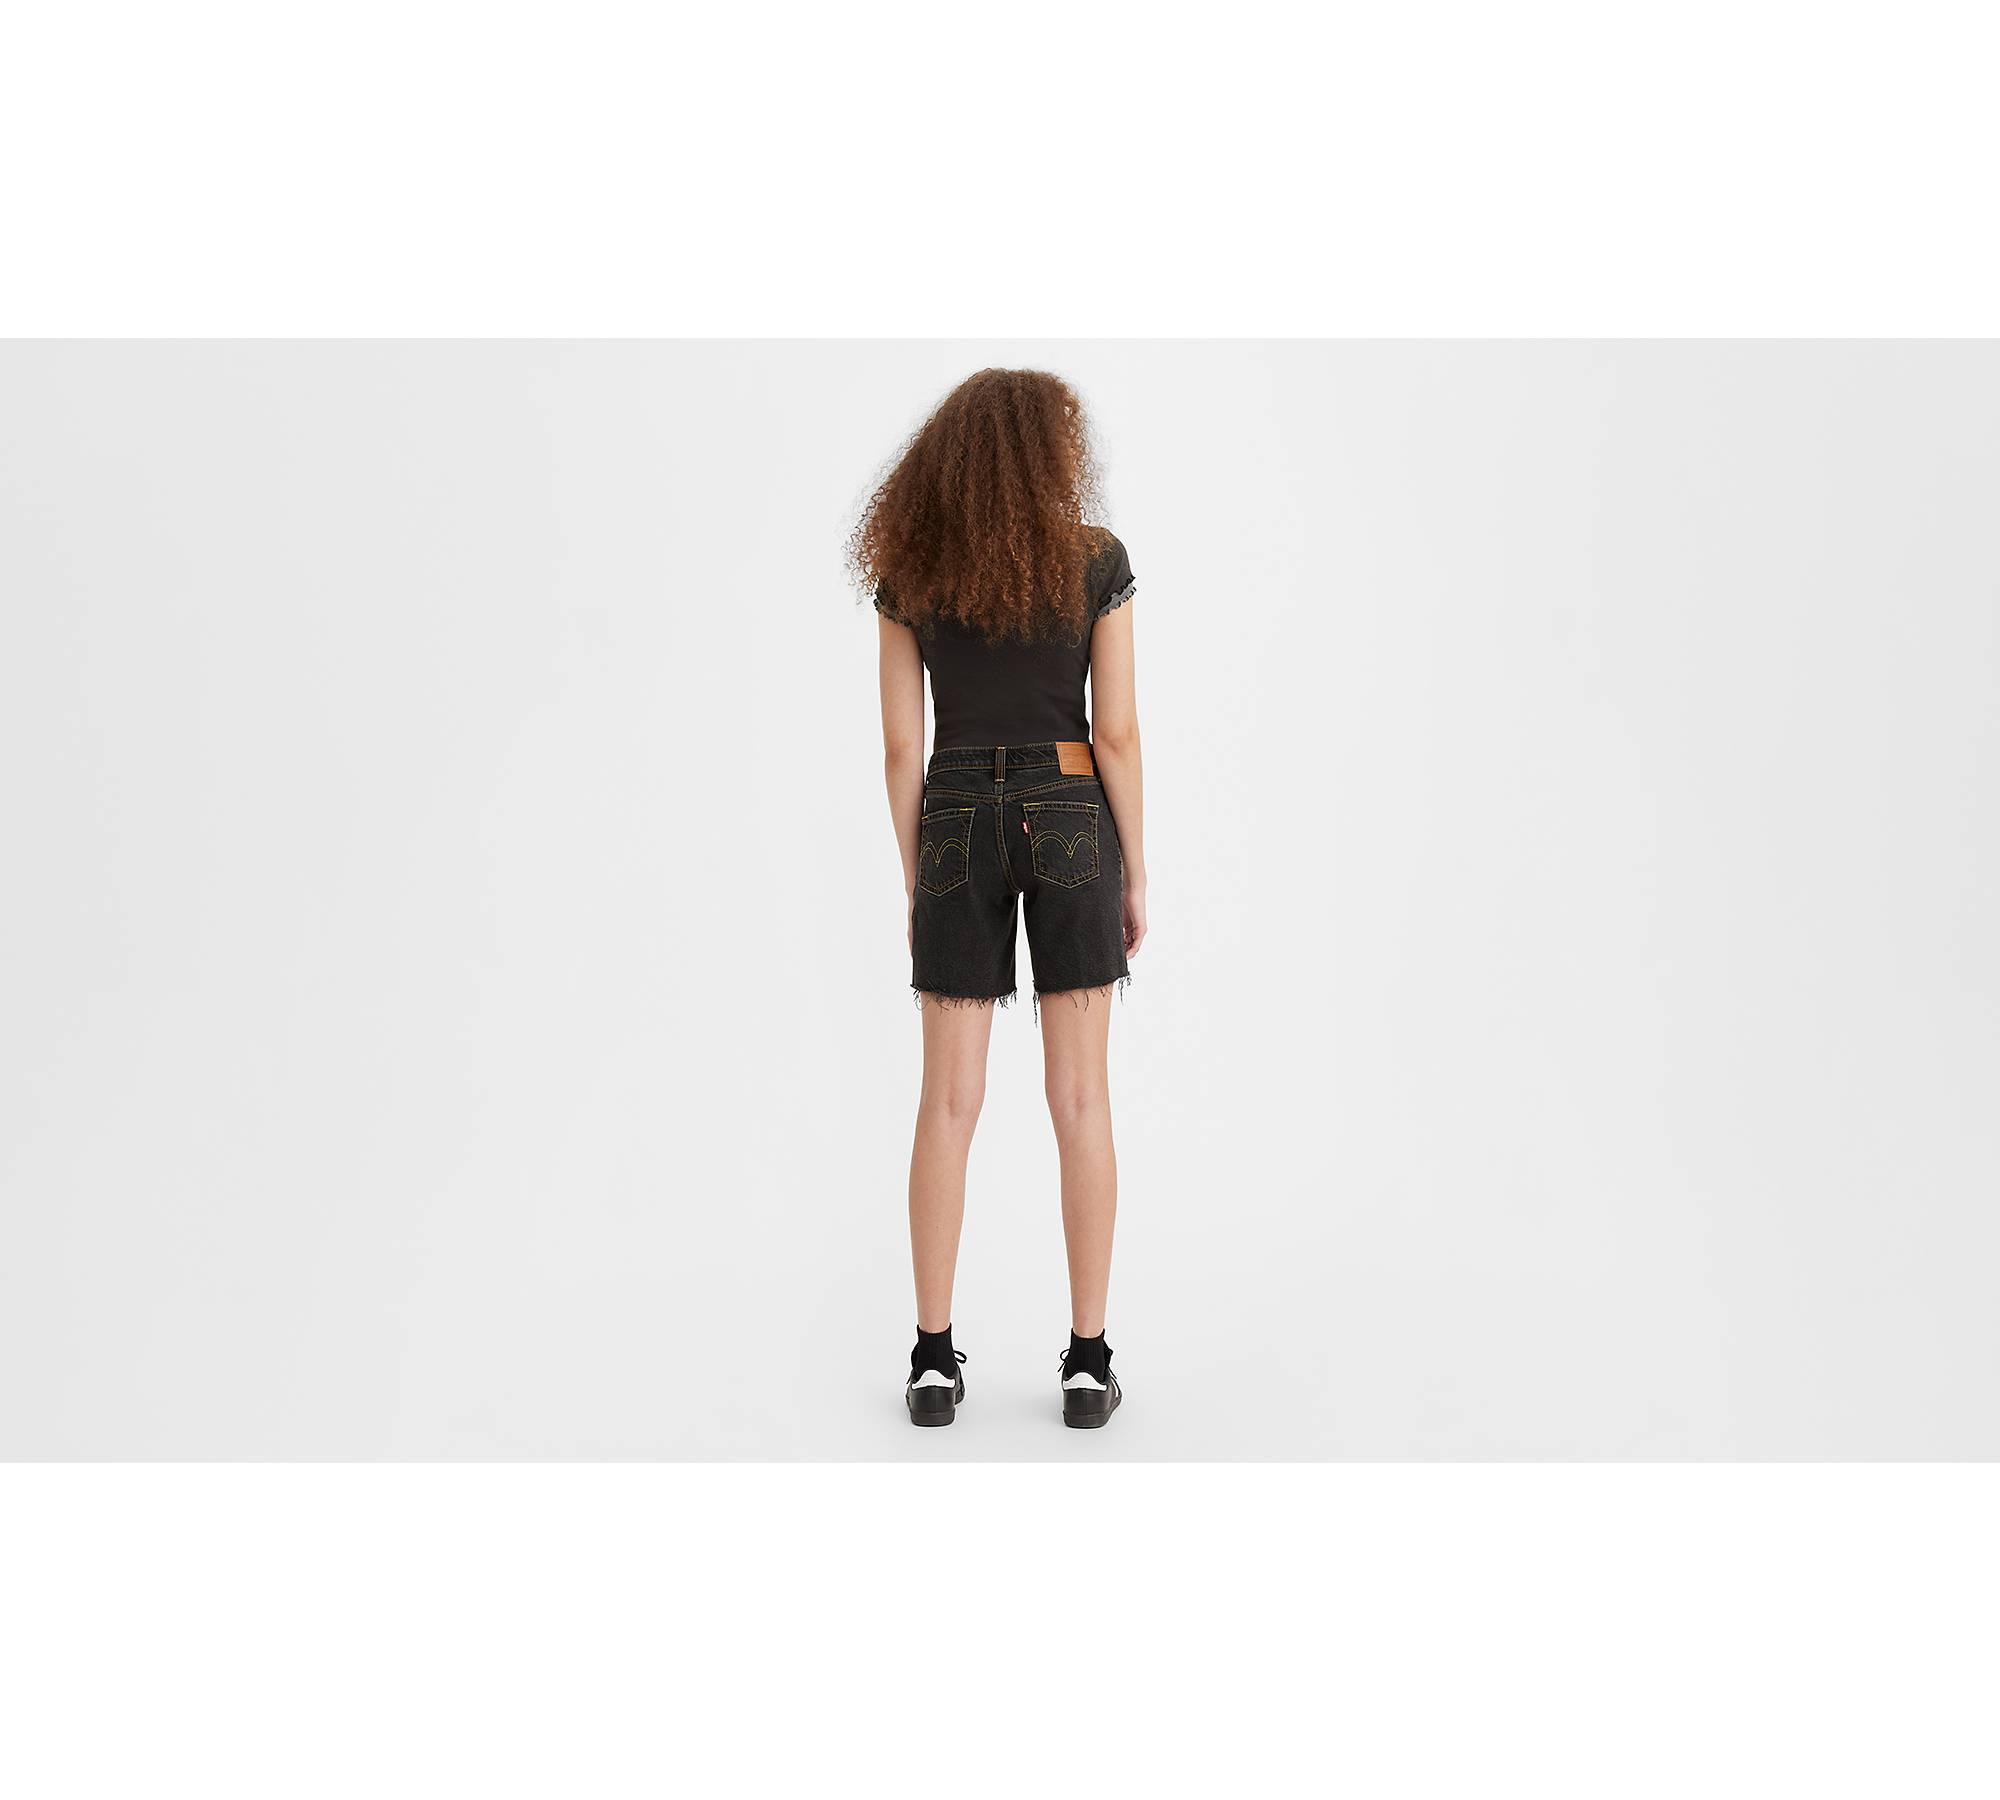 Redbat classics women's rust shorts offer at Sportscene